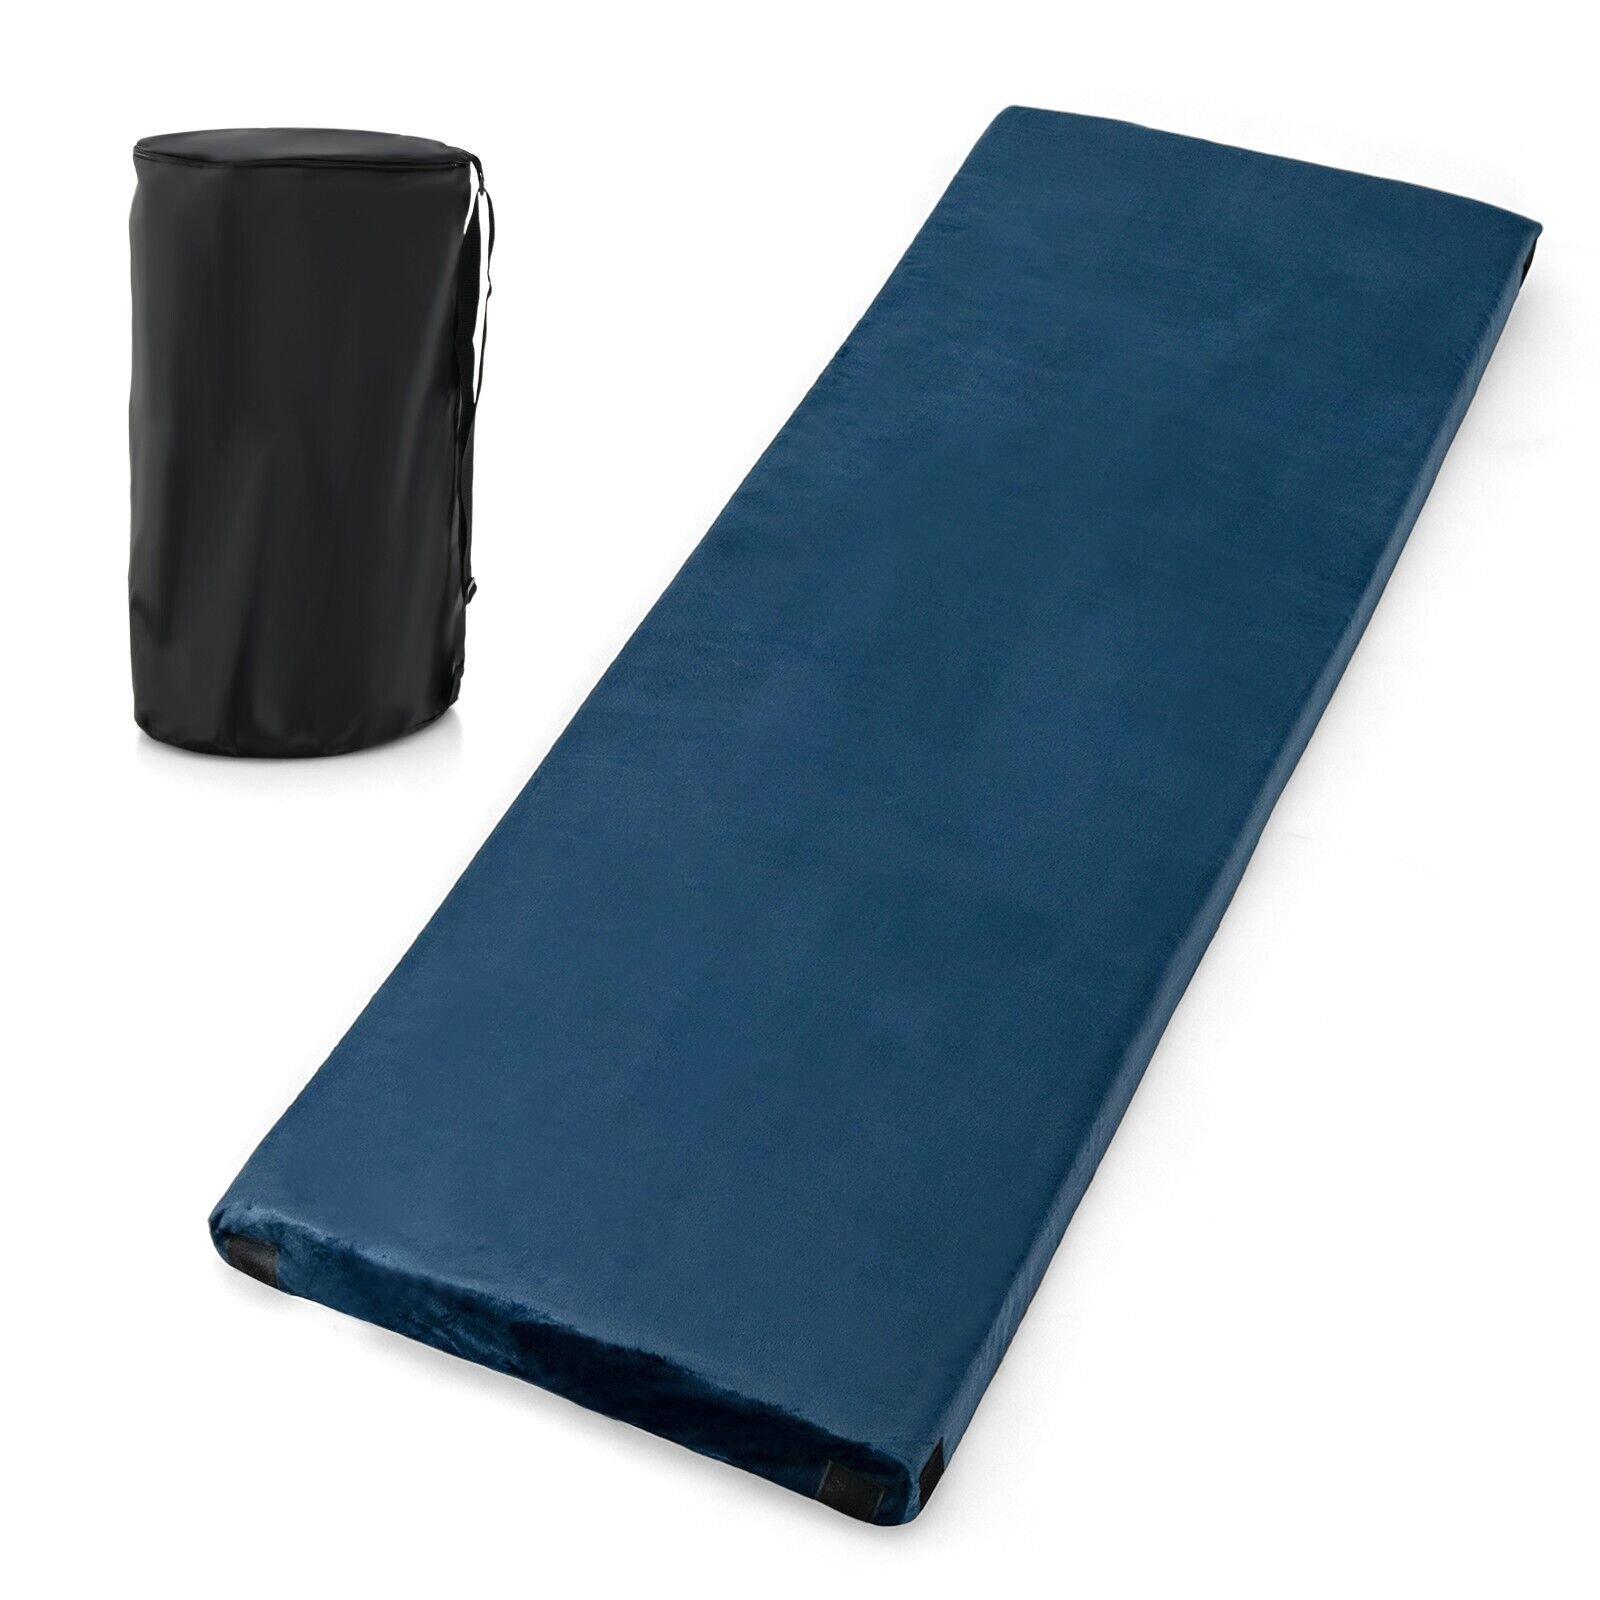 Folding Camping Memory Foam Mattress 6.5cm Thick Waterproof Roll up Sleeping Pad